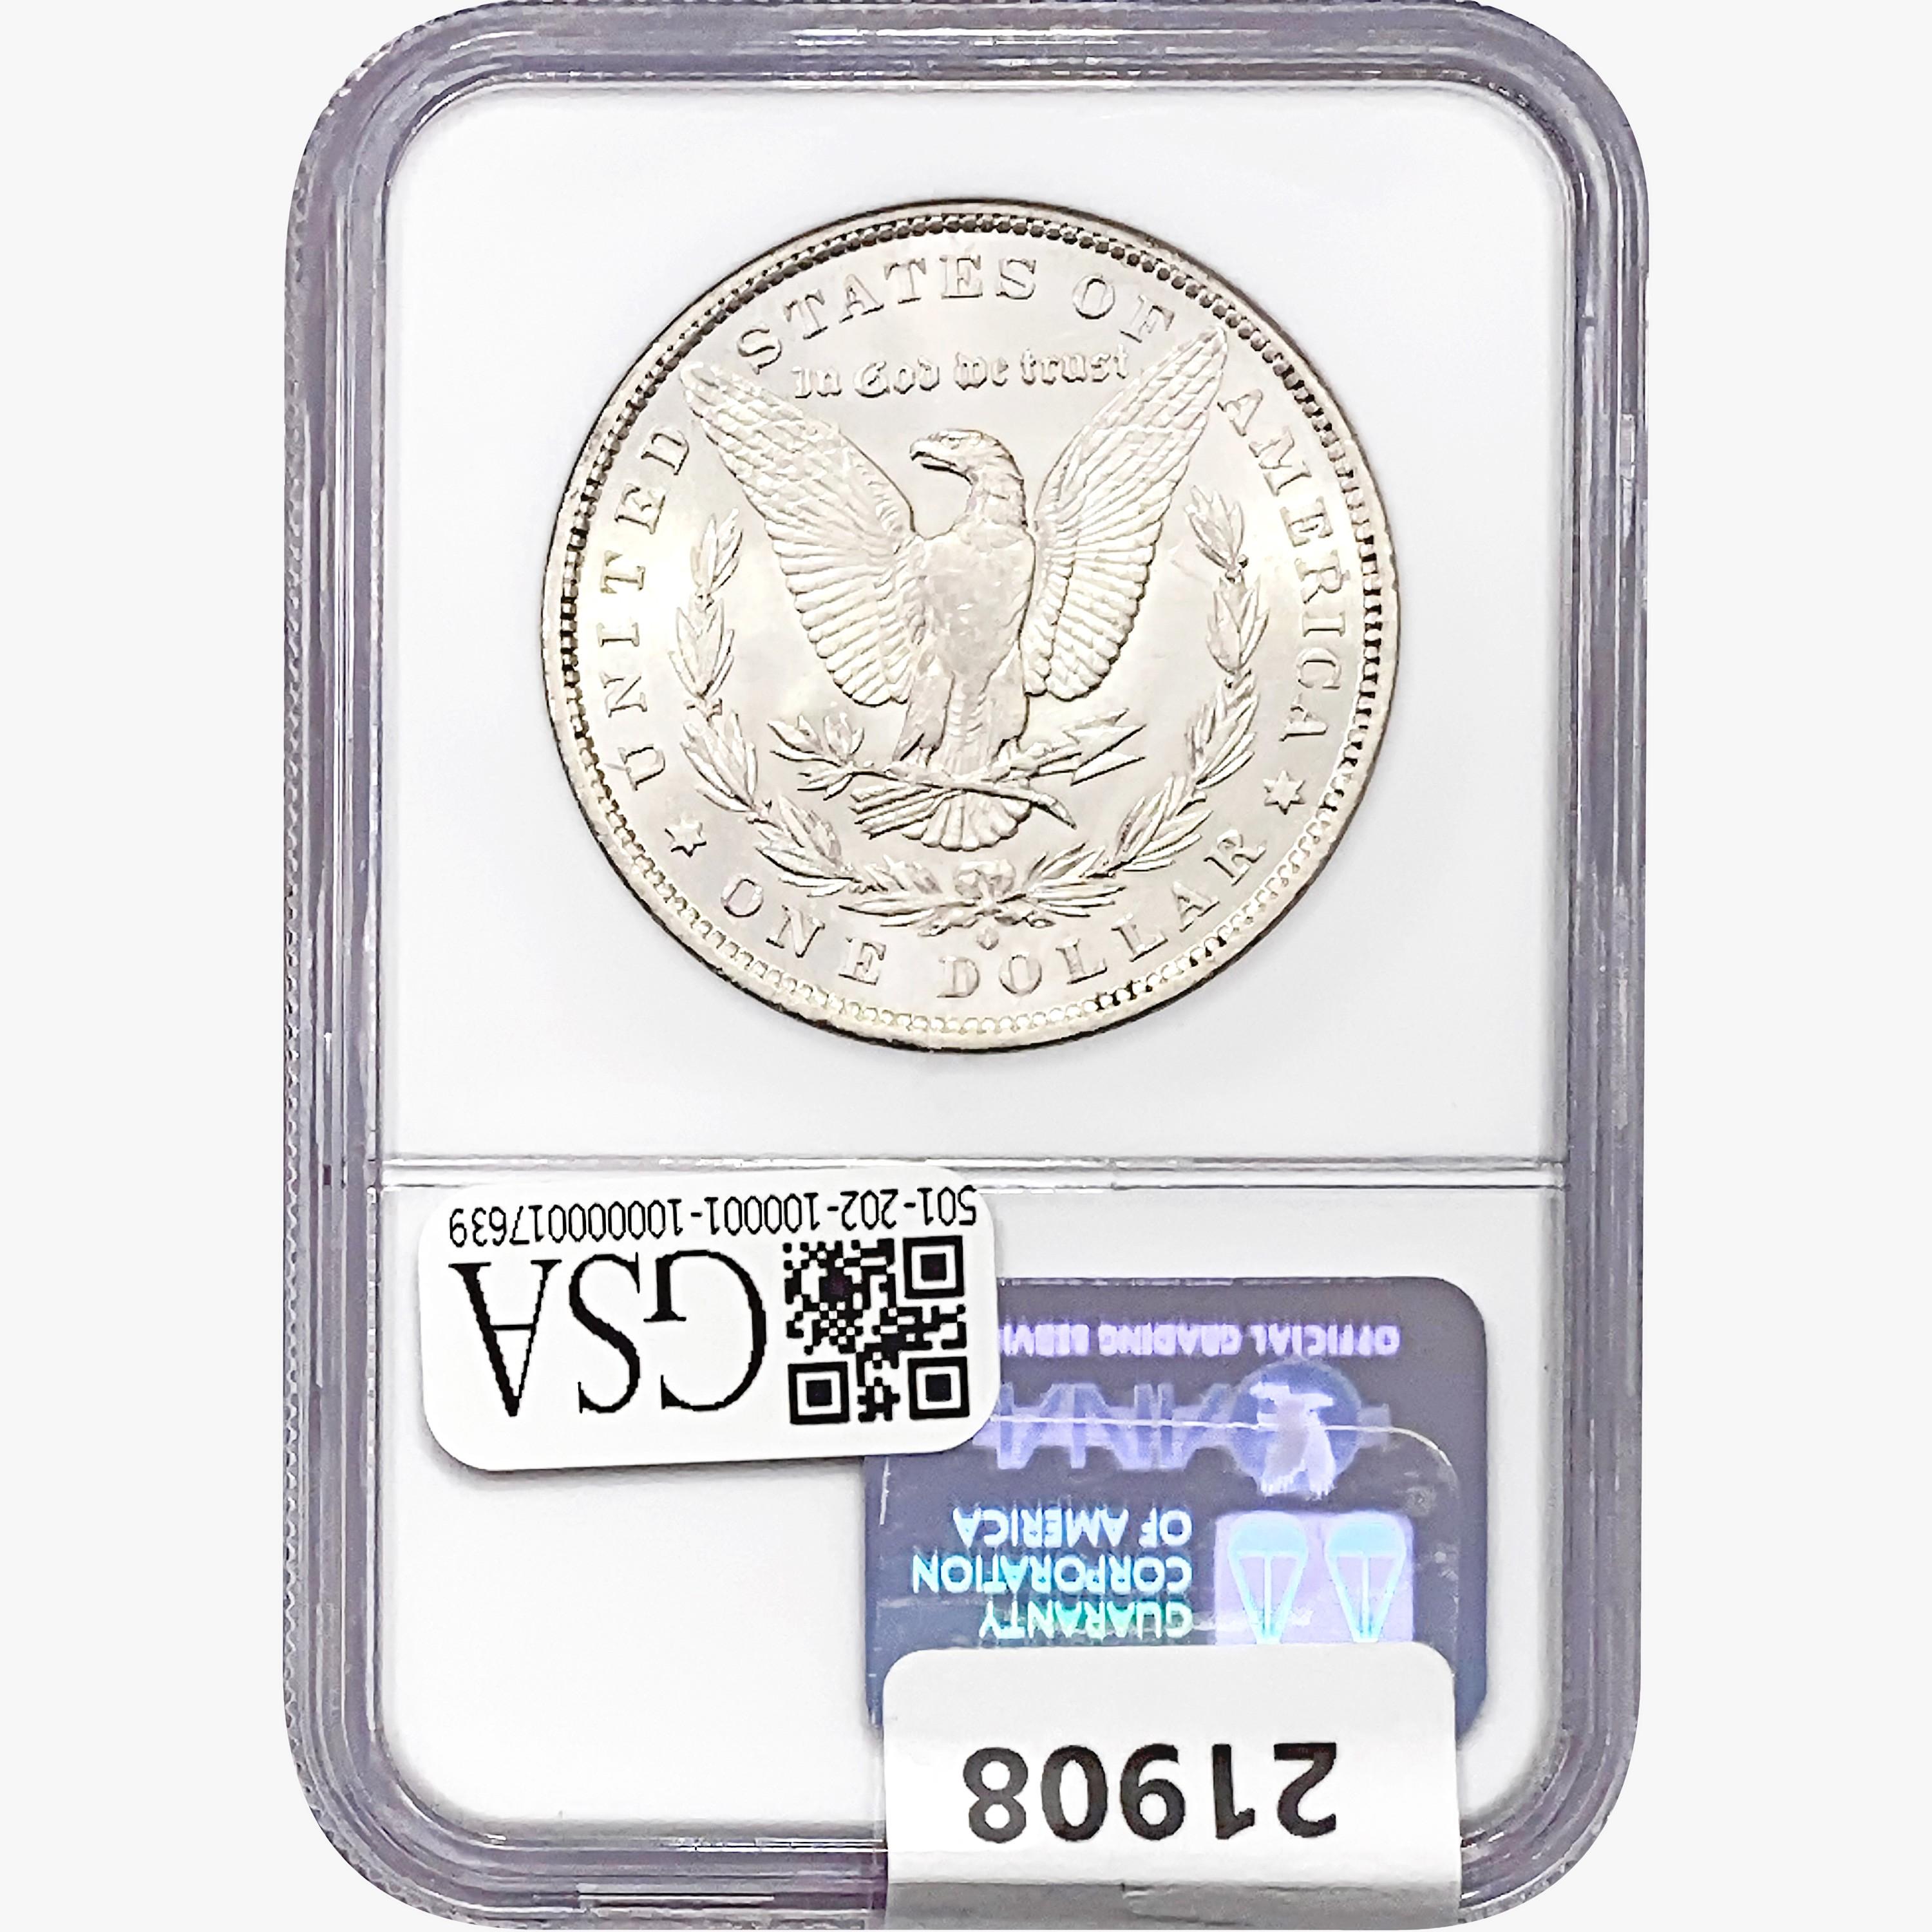 1884-O Morgan Silver Dollar NGC MS64